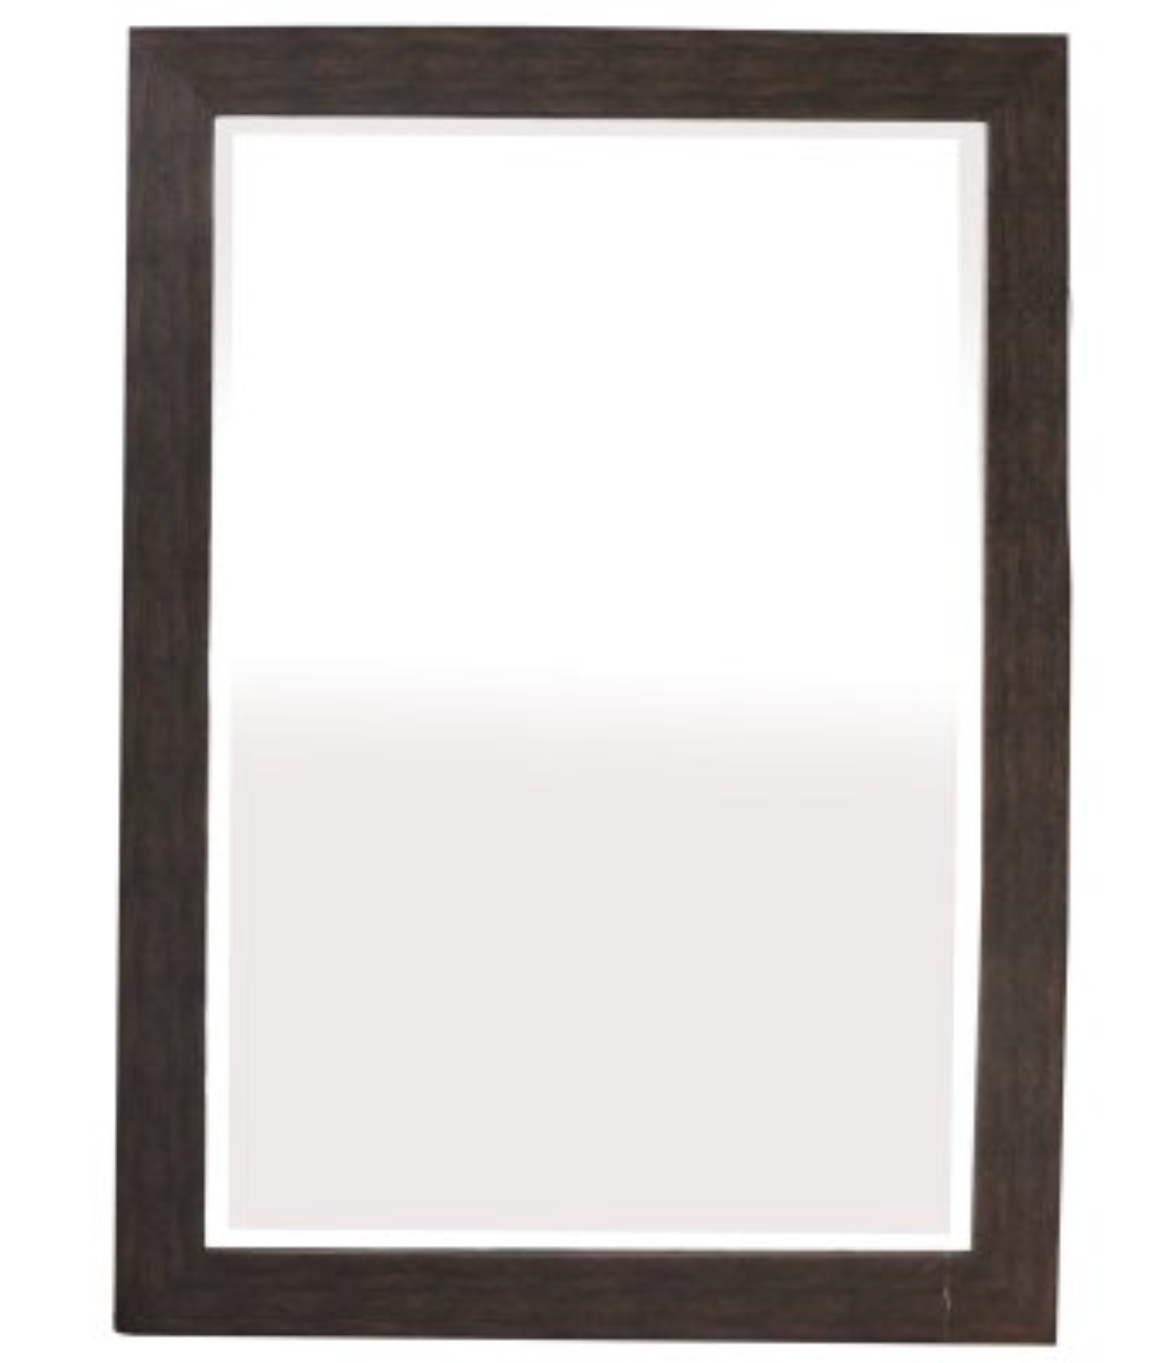 36" Framed Mirror in Espresso Finish